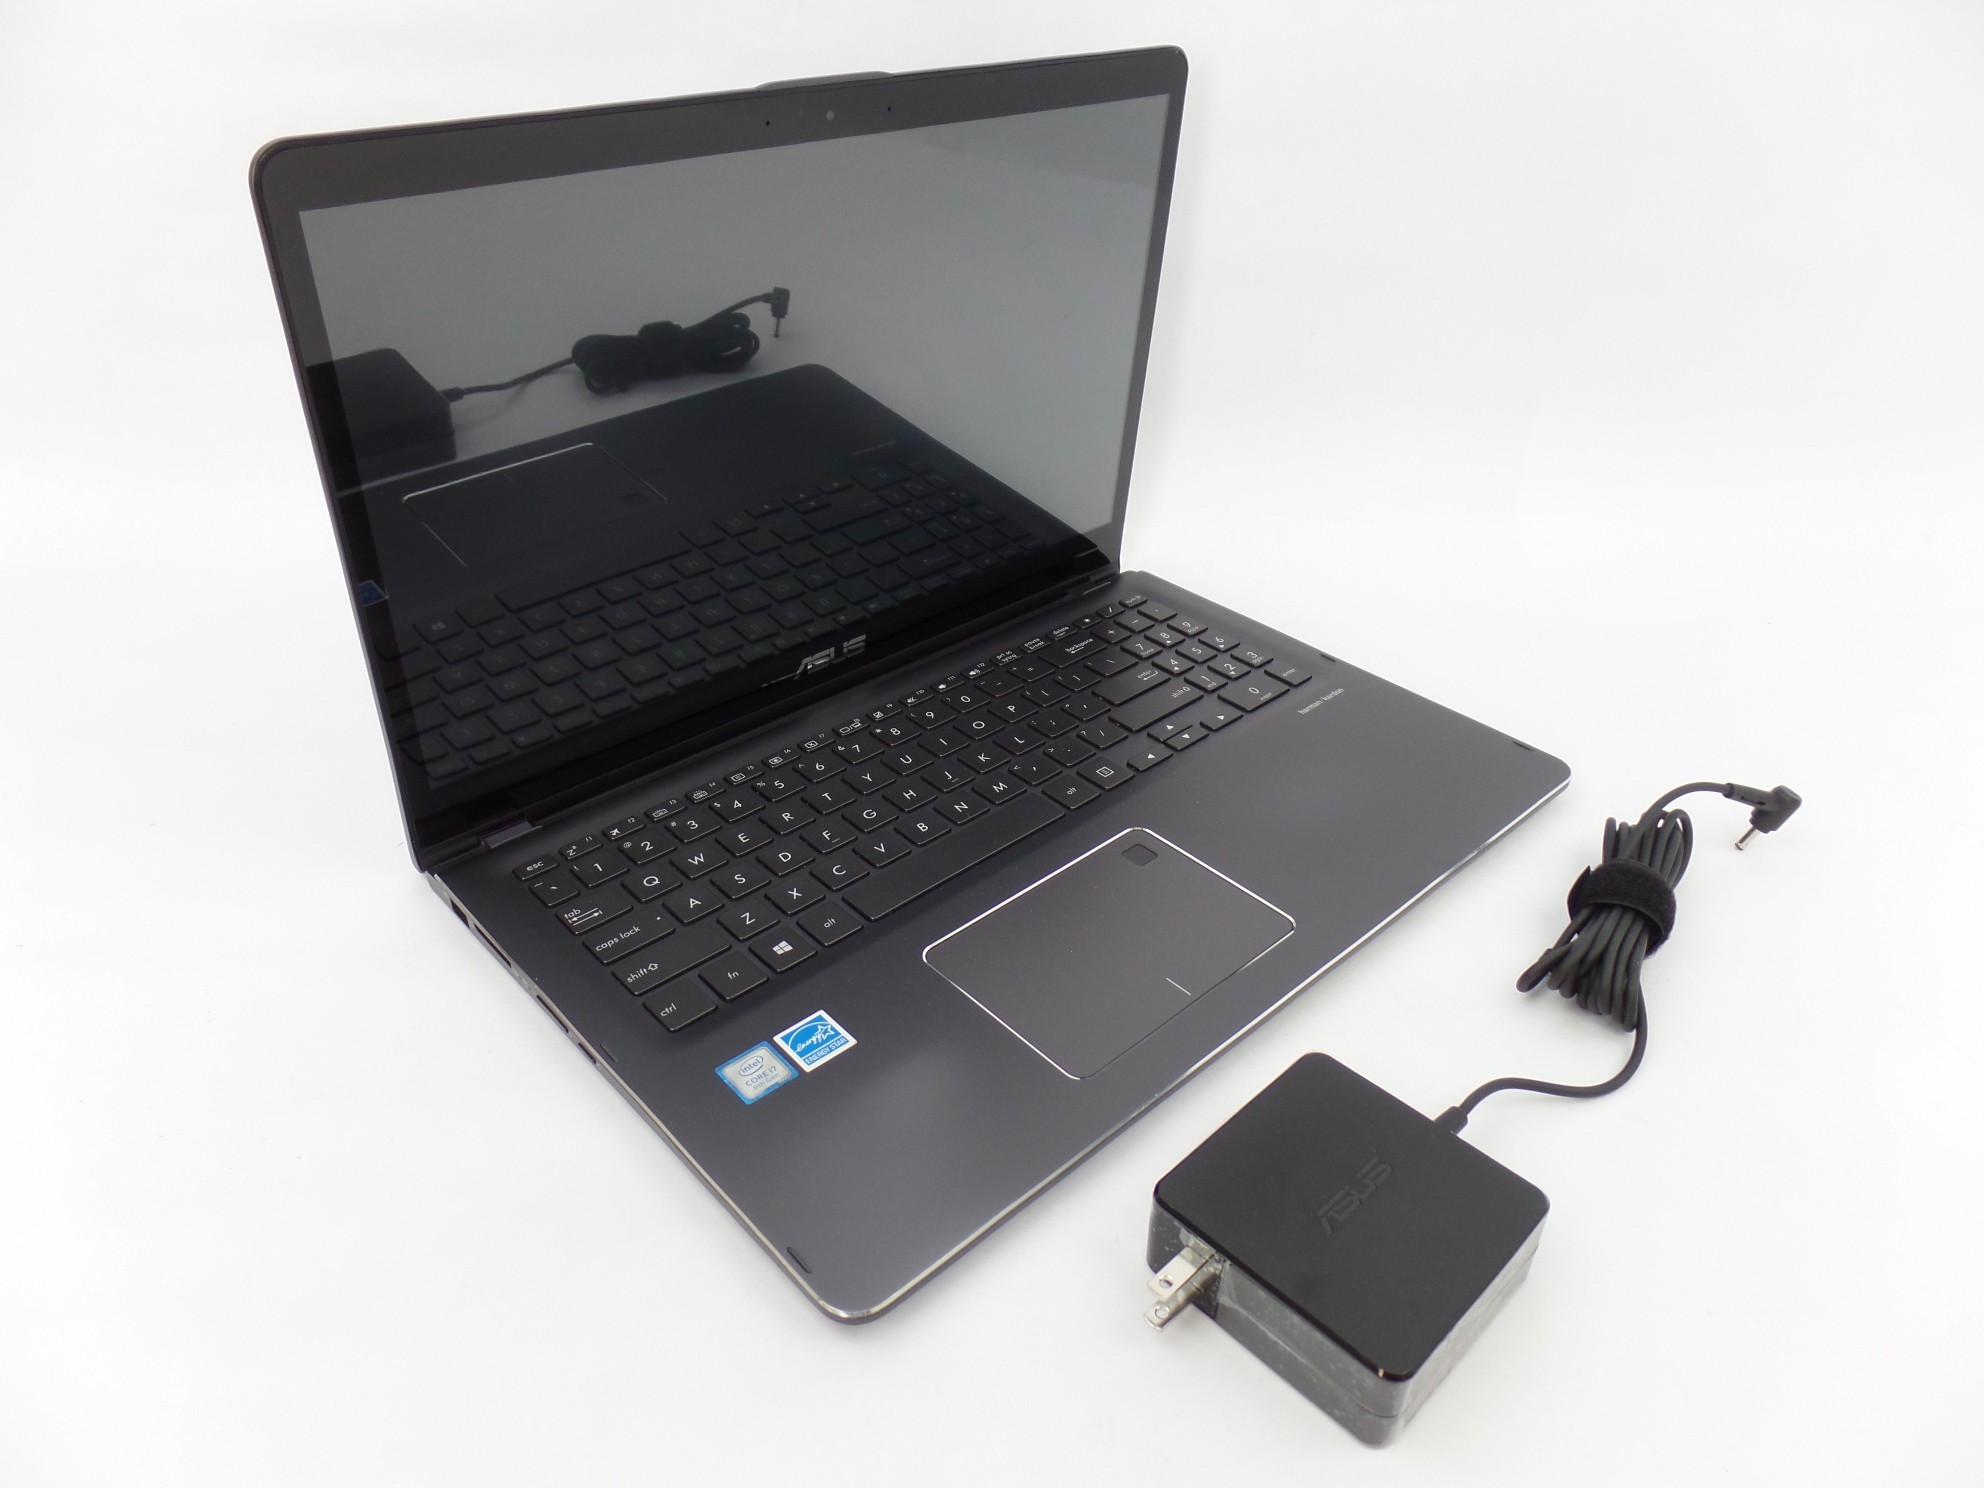 ASUS Q525UA-BI7T9 15.6" FHD Touch i7-8550U 1.8GHz 16GB 2TB HDD W10H 2in1 Laptop